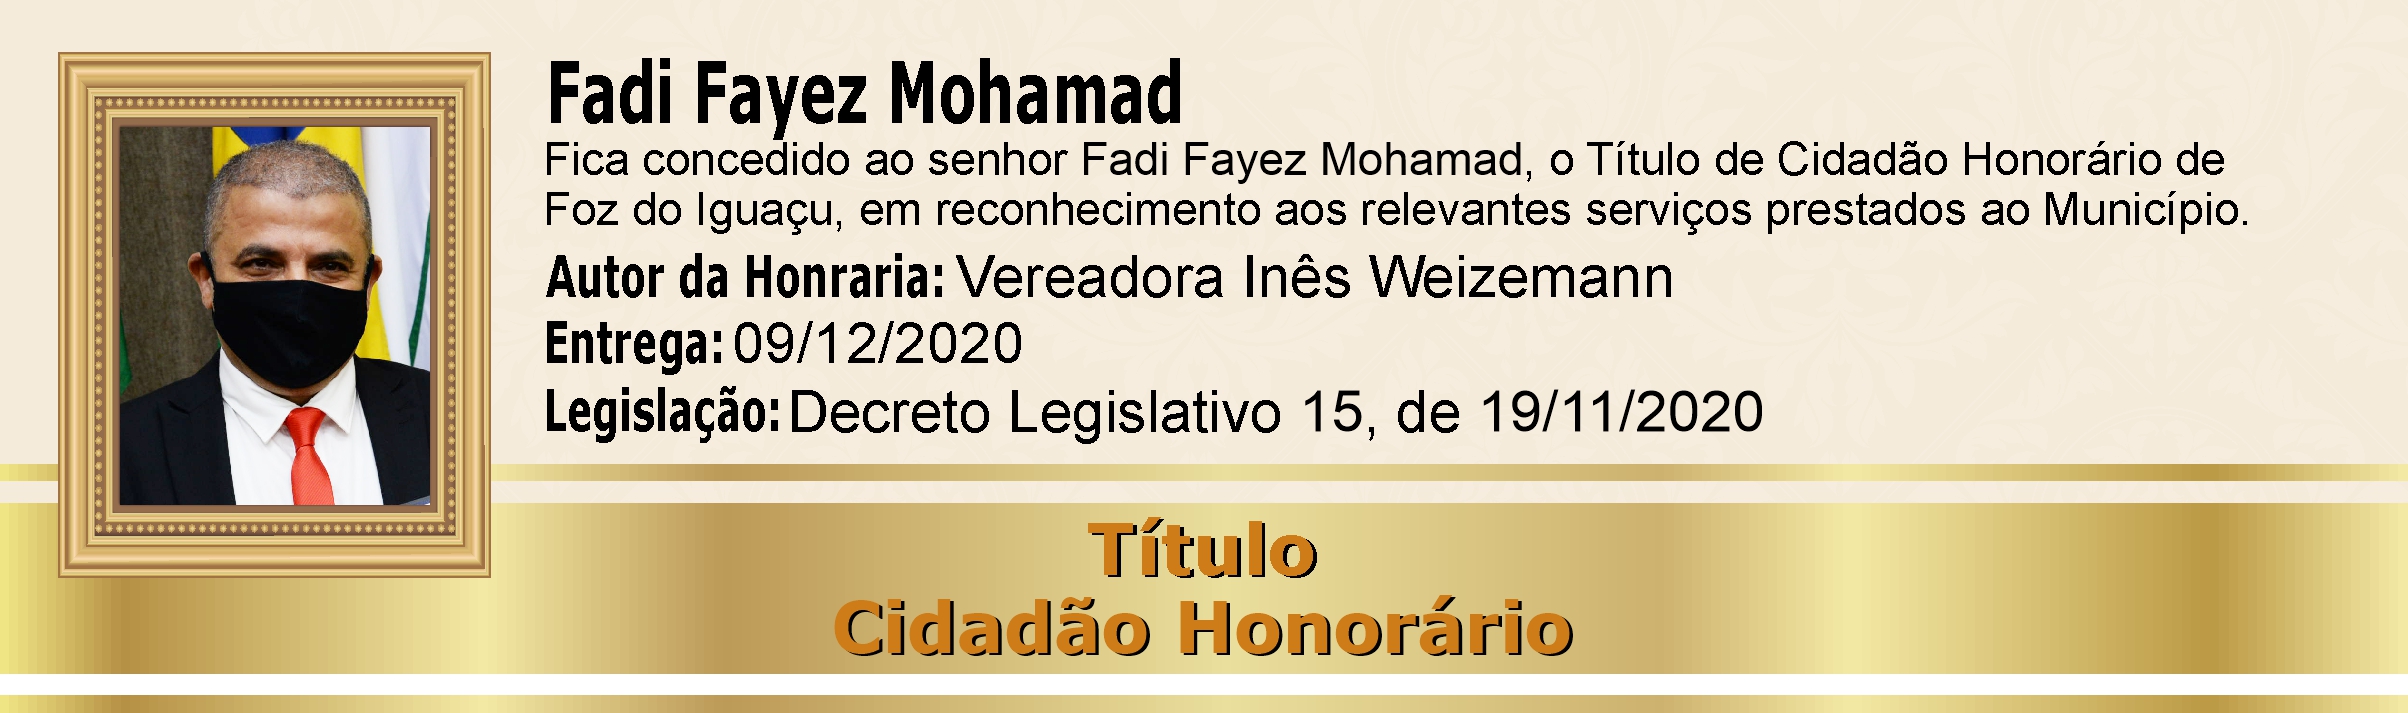 Fadi Fayez Mohamad